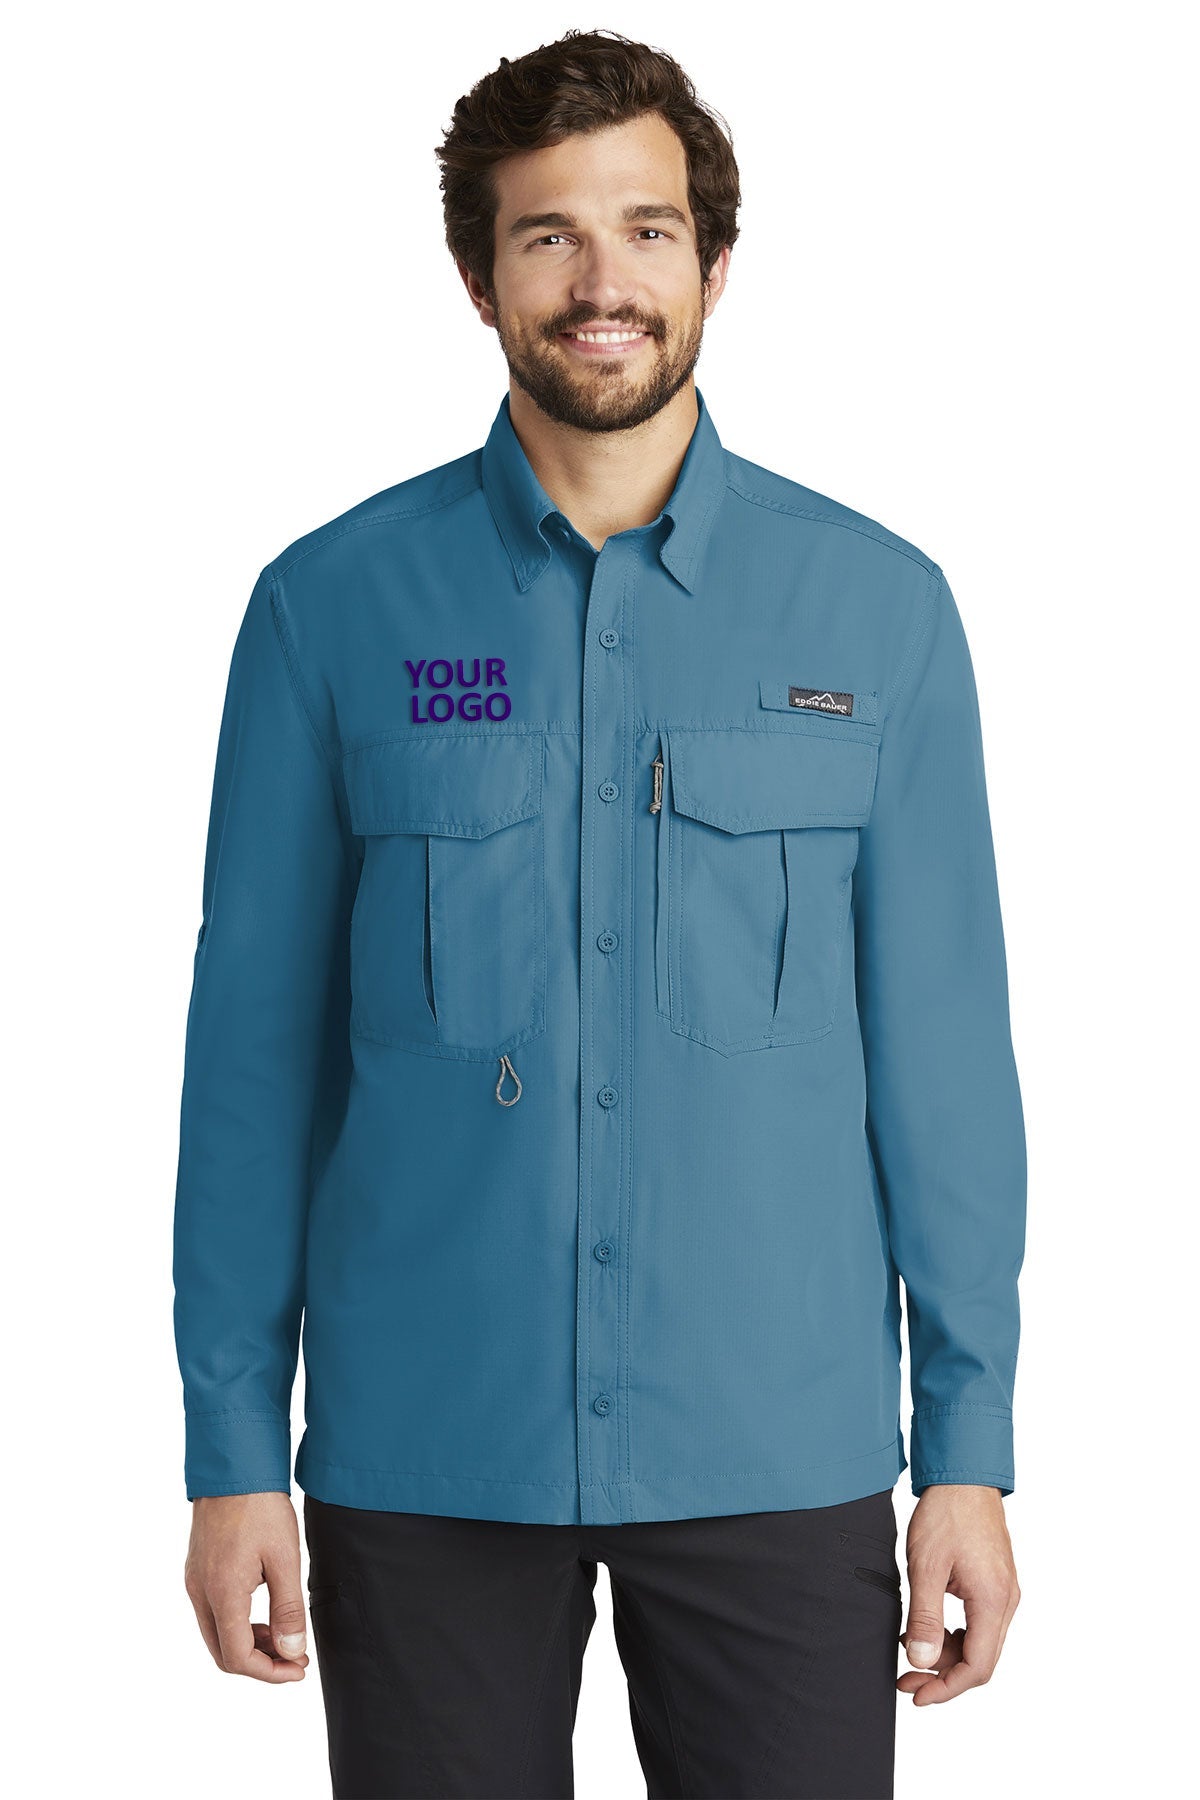 Eddie Bauer Long Sleeve Performance Branded Fishing Shirts, Gulf Teal